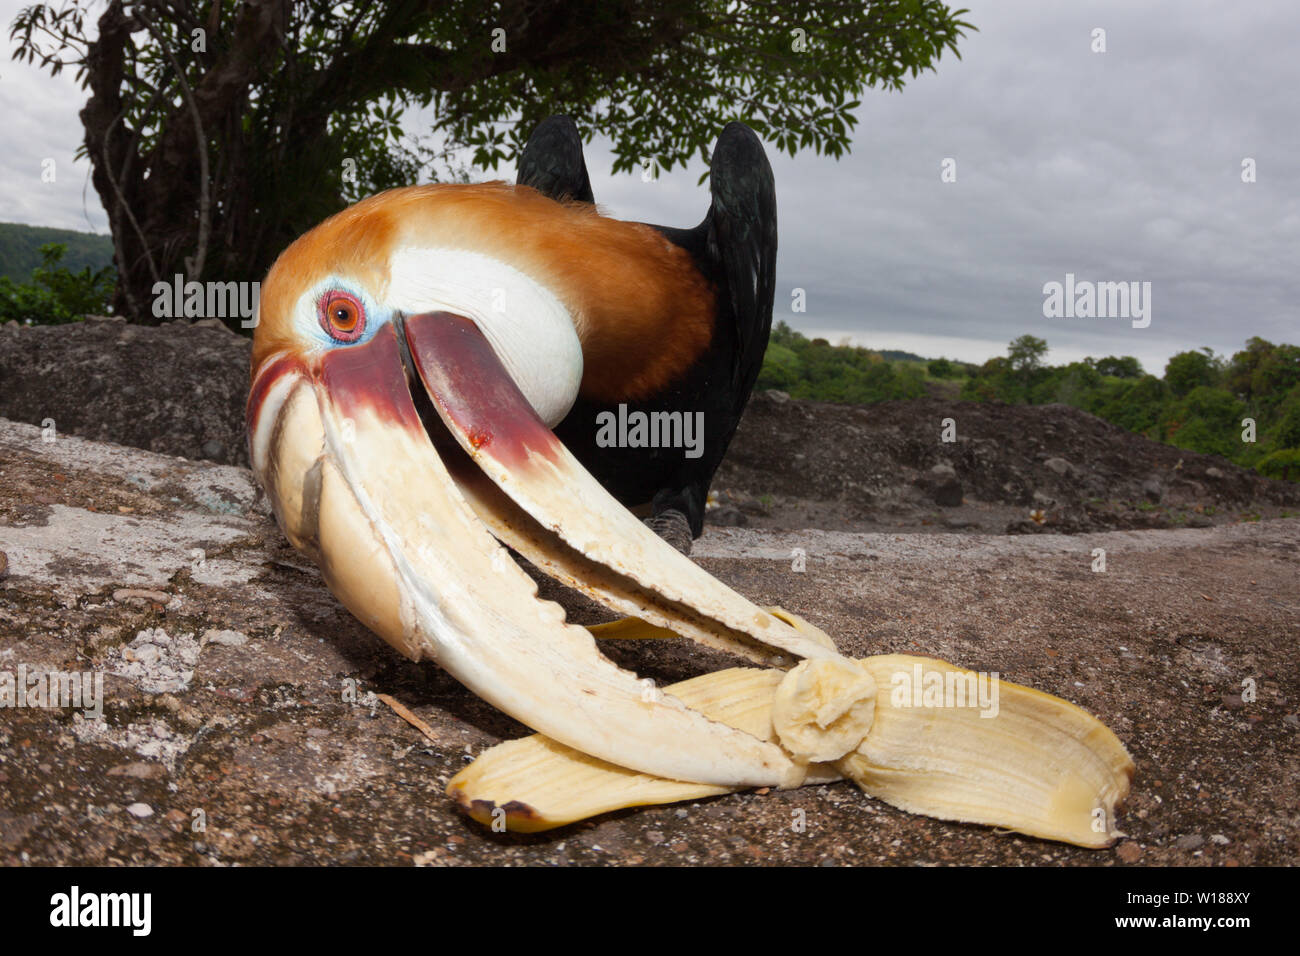 Papuan Hornbill, Rhyticeros plicatus, Tufi, Oro Province, Papua New Guinea Stock Photo